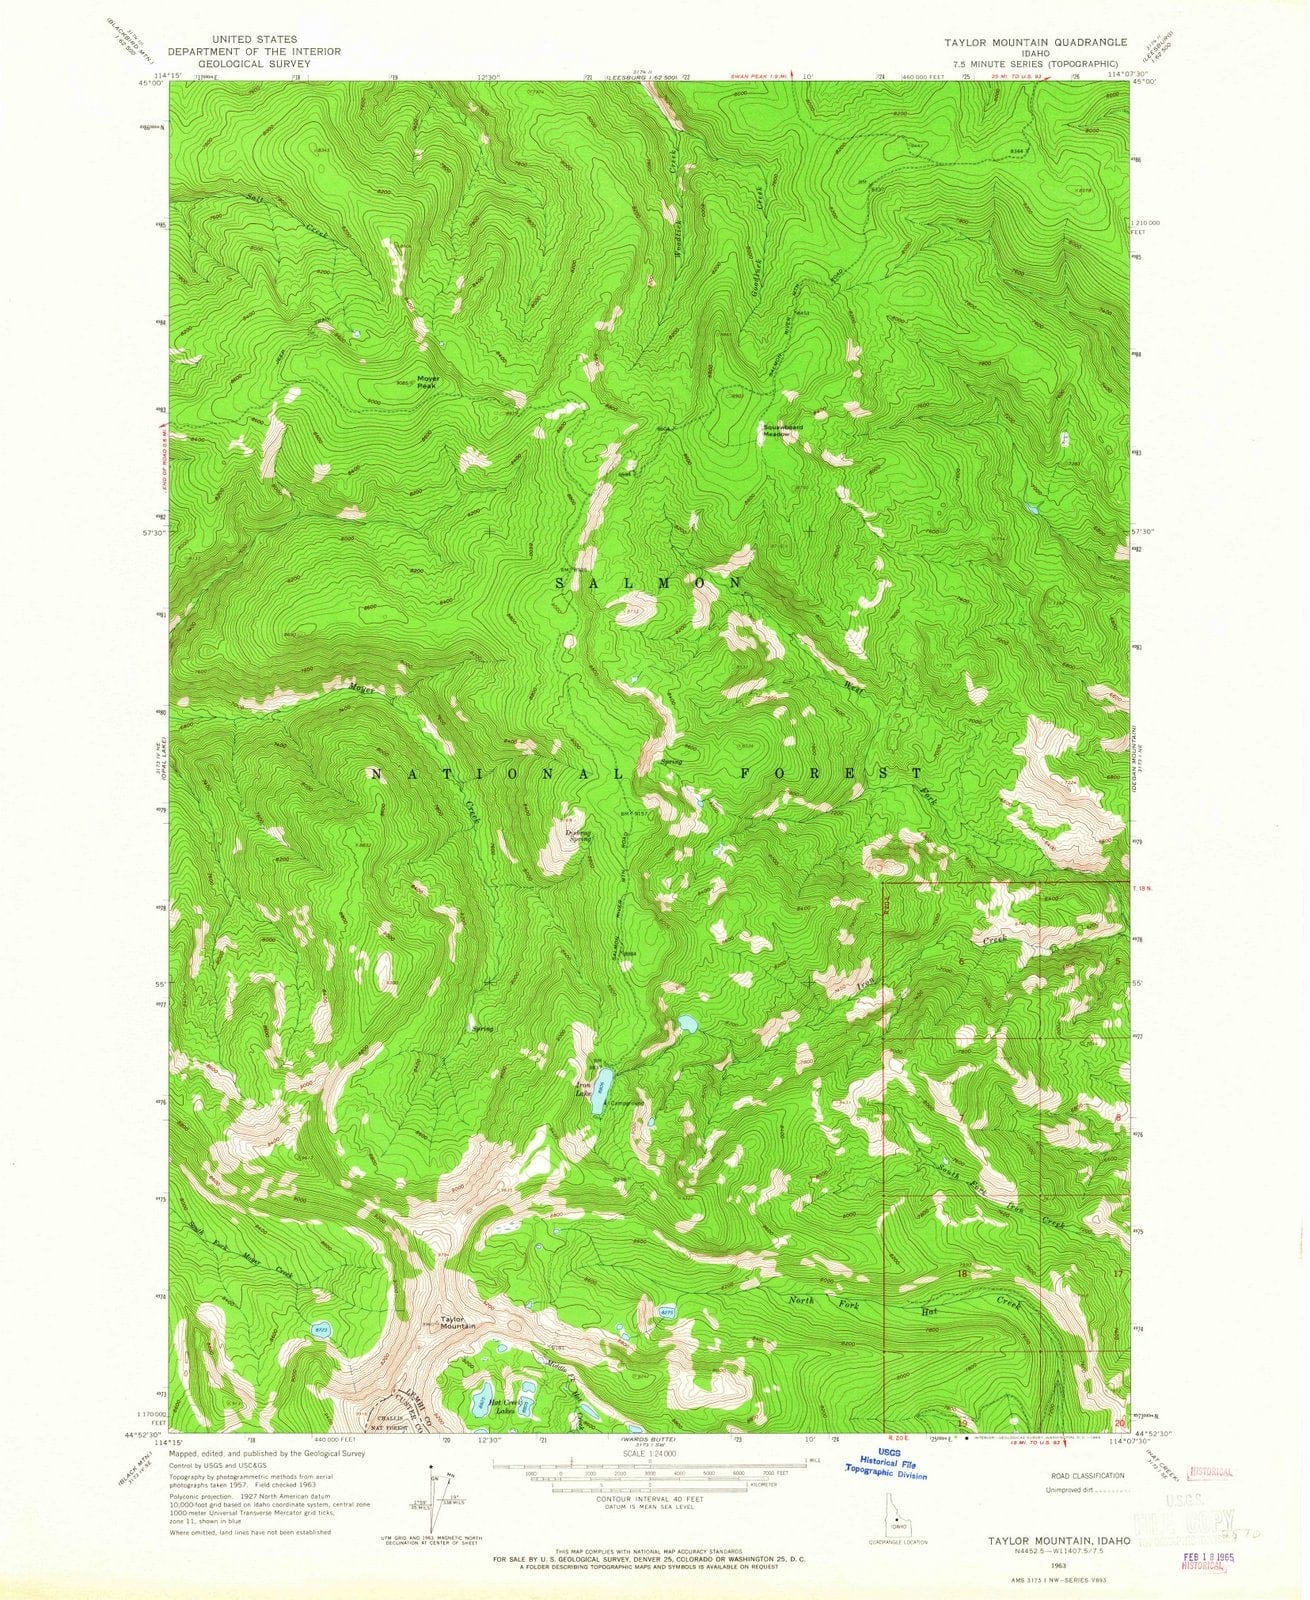 1963 Taylor Mountain, ID - Idaho - USGS Topographic Map